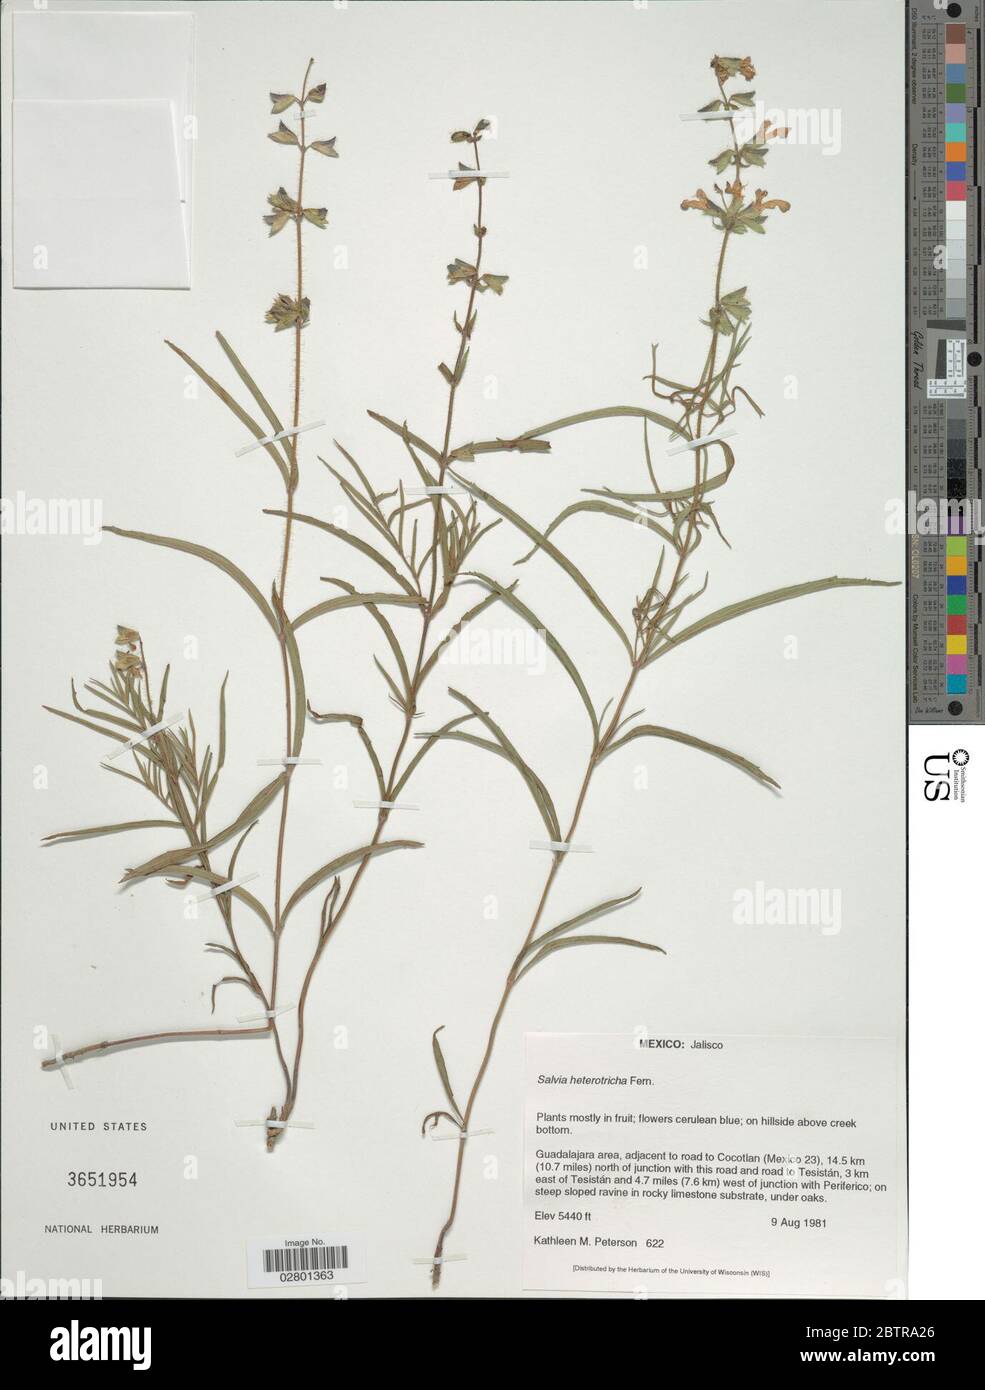 Salvia heterotricha Fernald. Stock Photo